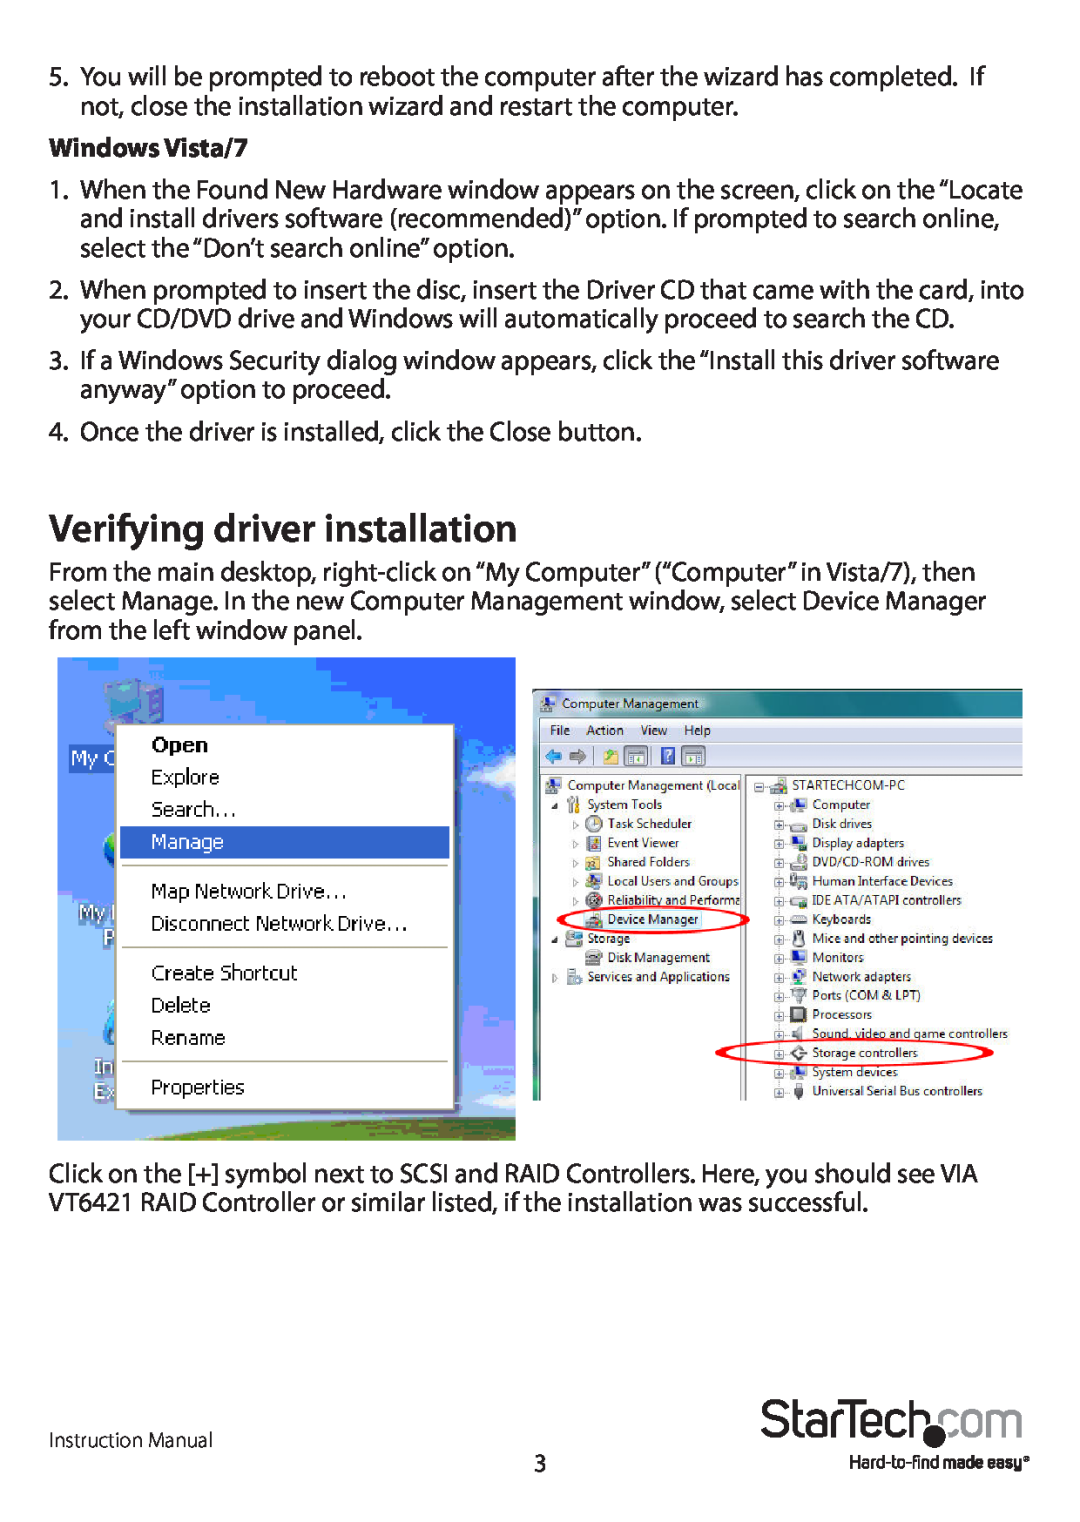 StarTech.com PCISAT2IDE1 manual Verifying driver installation, Windows Vista/7 